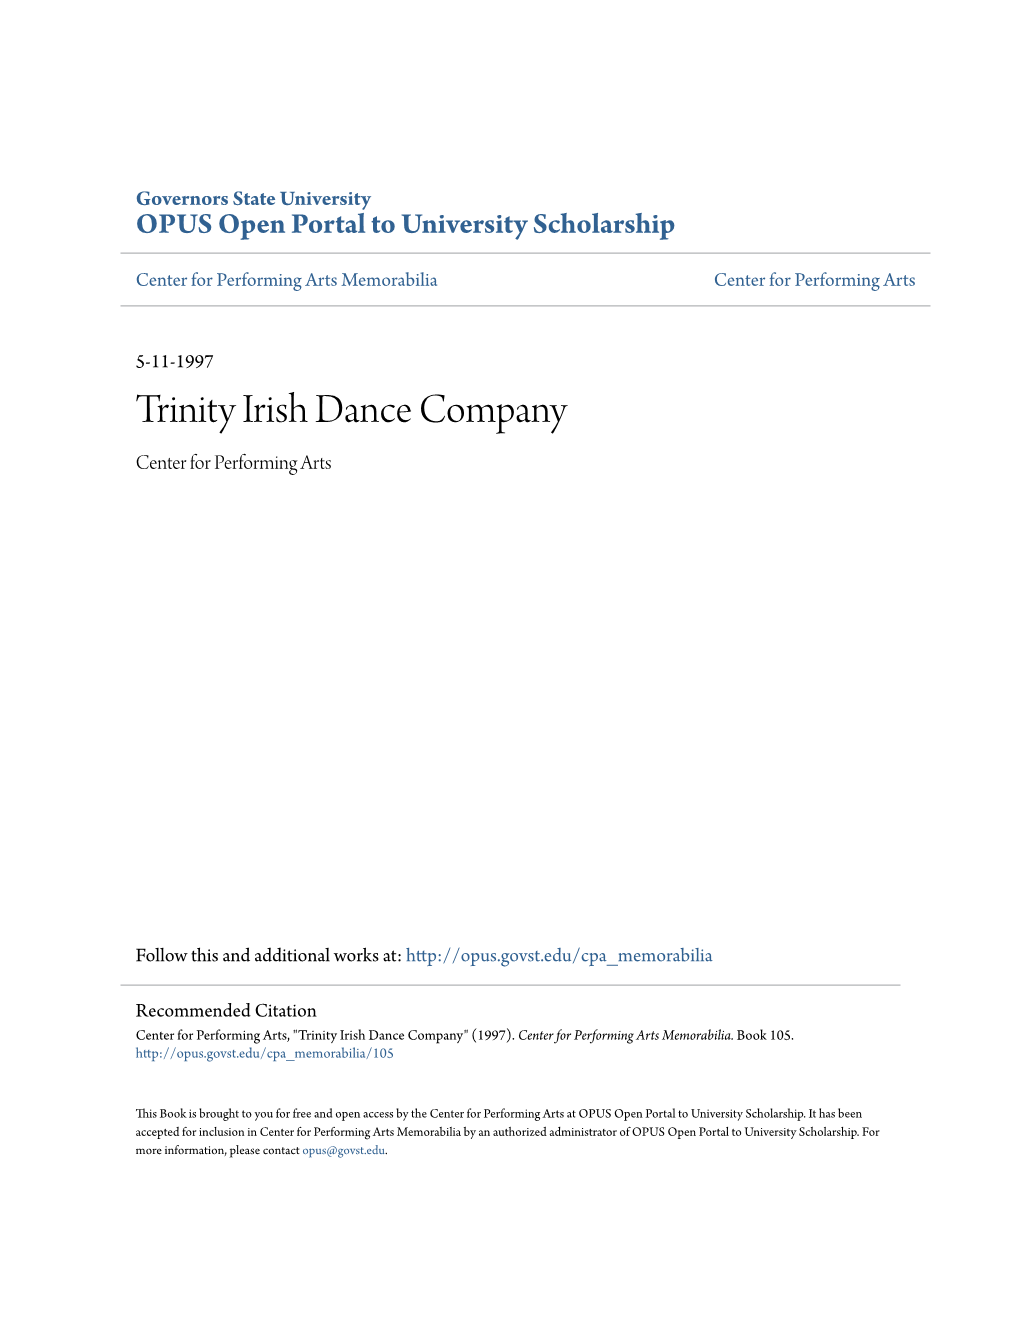 Trinity Irish Dance Company Center for Performing Arts